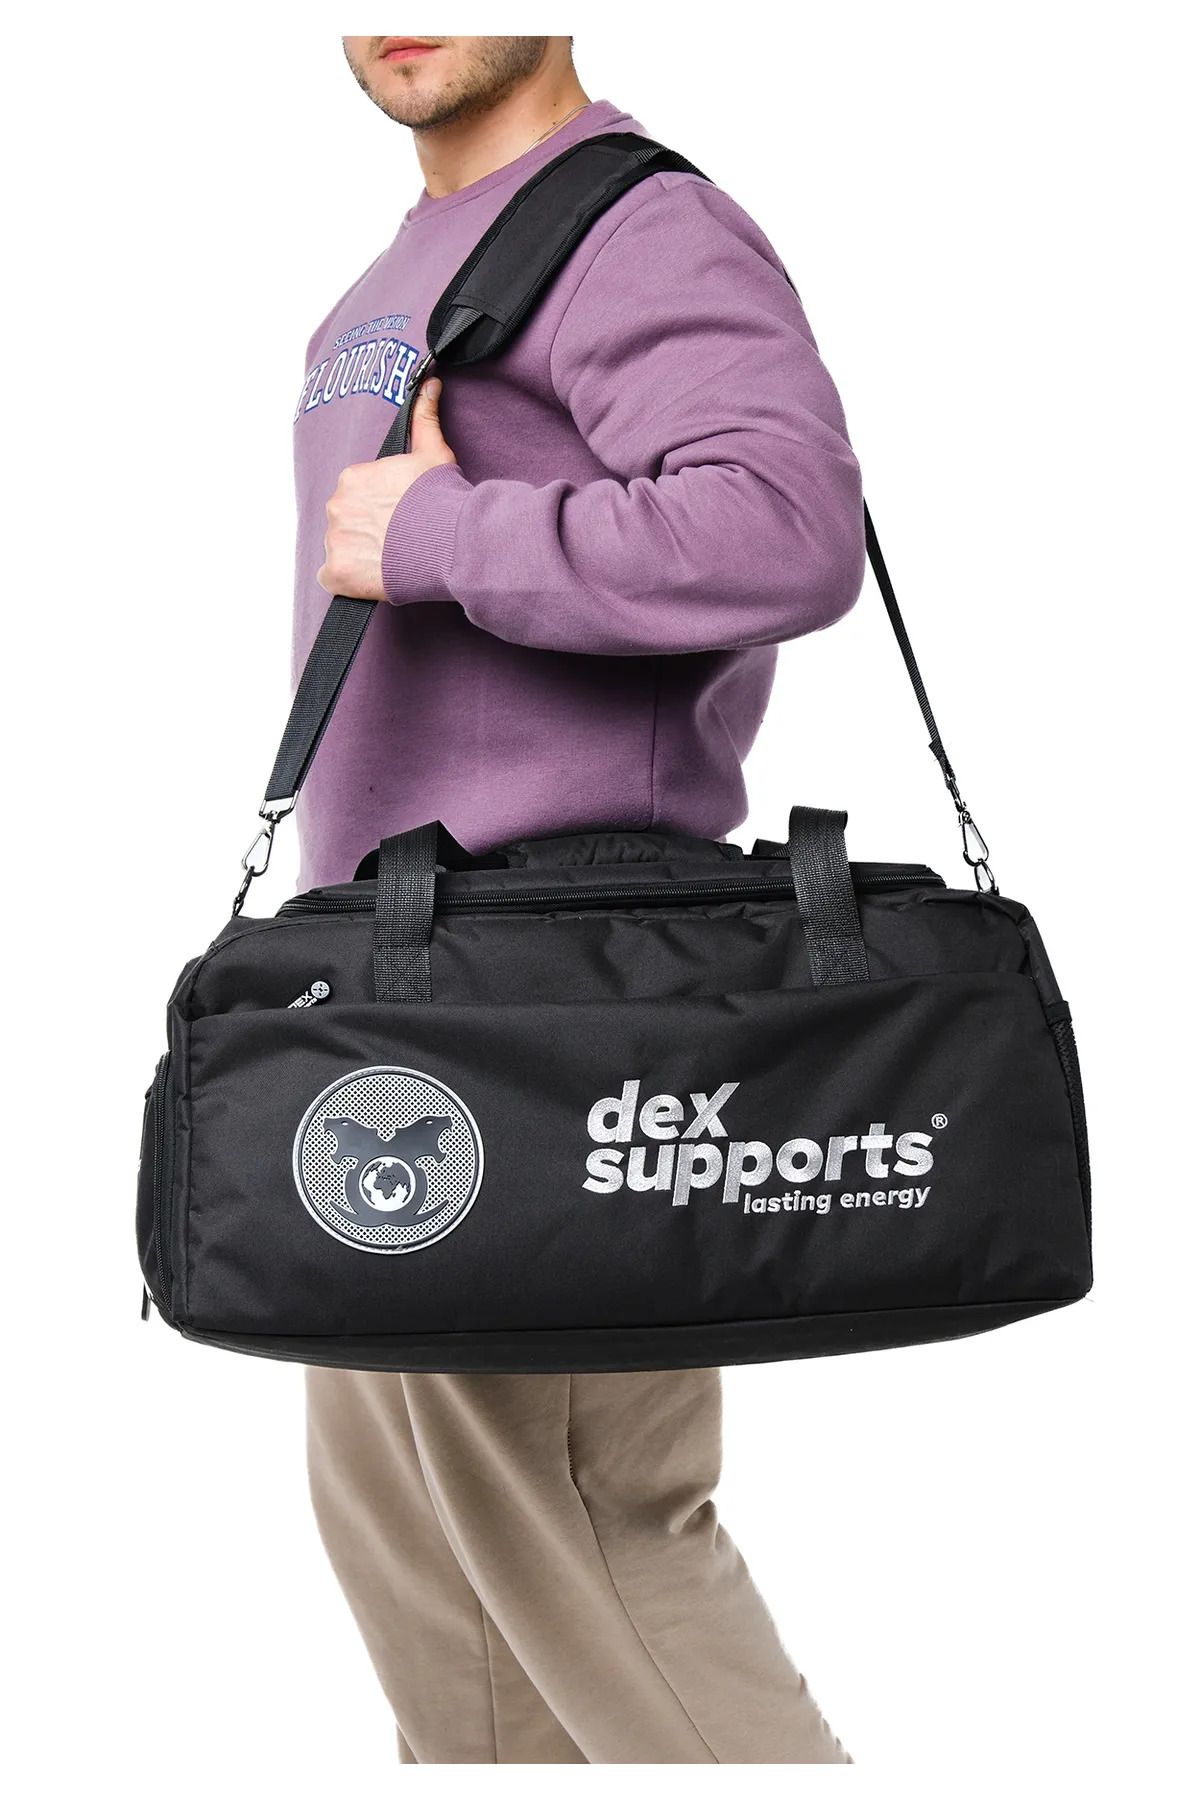 Dex Supports Lasting Energy Spor Çanta XXL Büyük Boy Fitness Spor Çantası BİG BAG